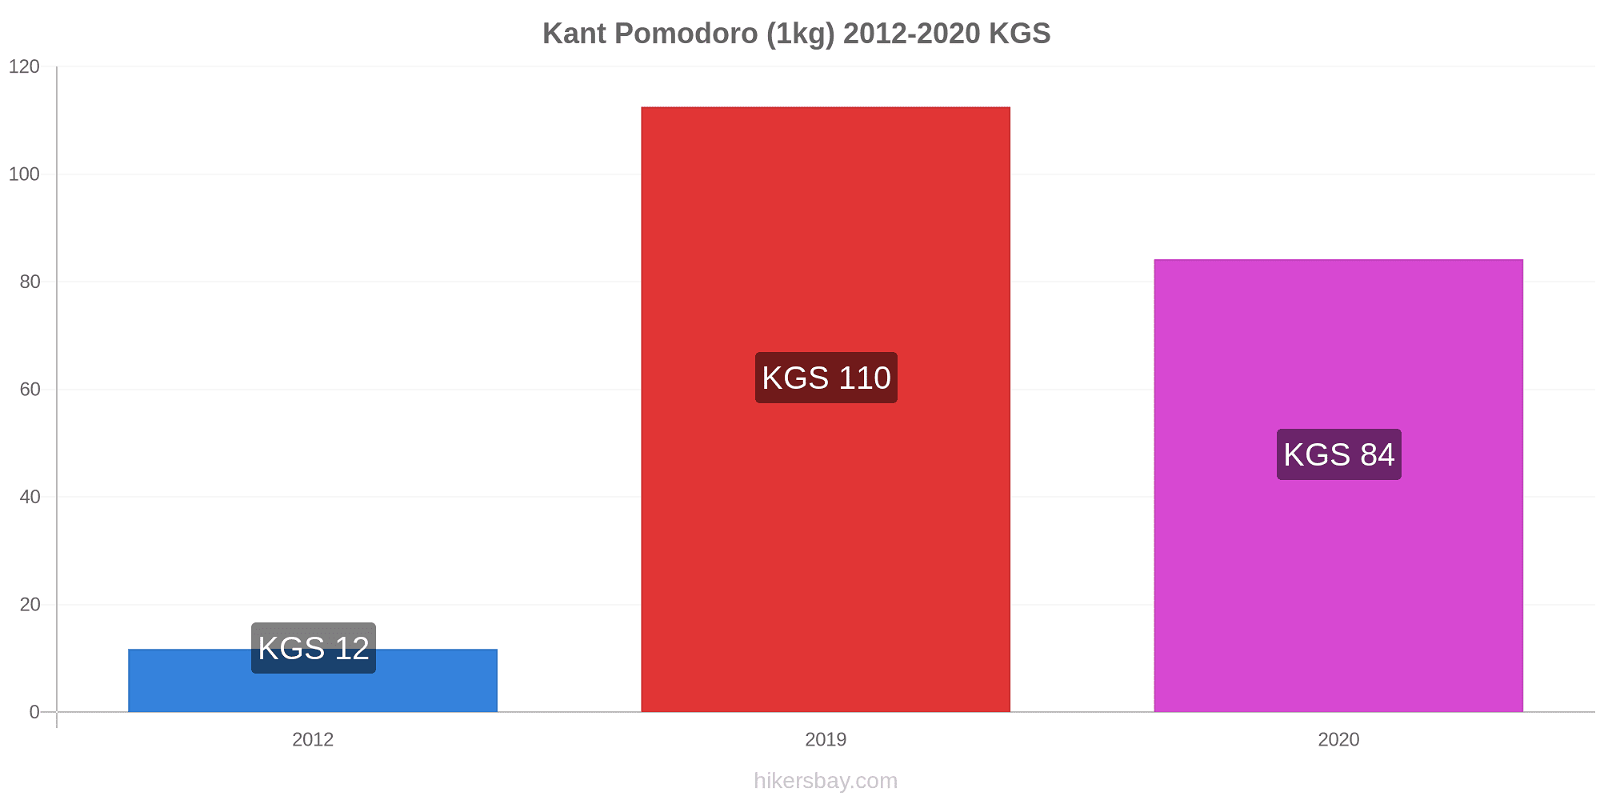 Kant variazioni di prezzo Pomodoro (1kg) hikersbay.com